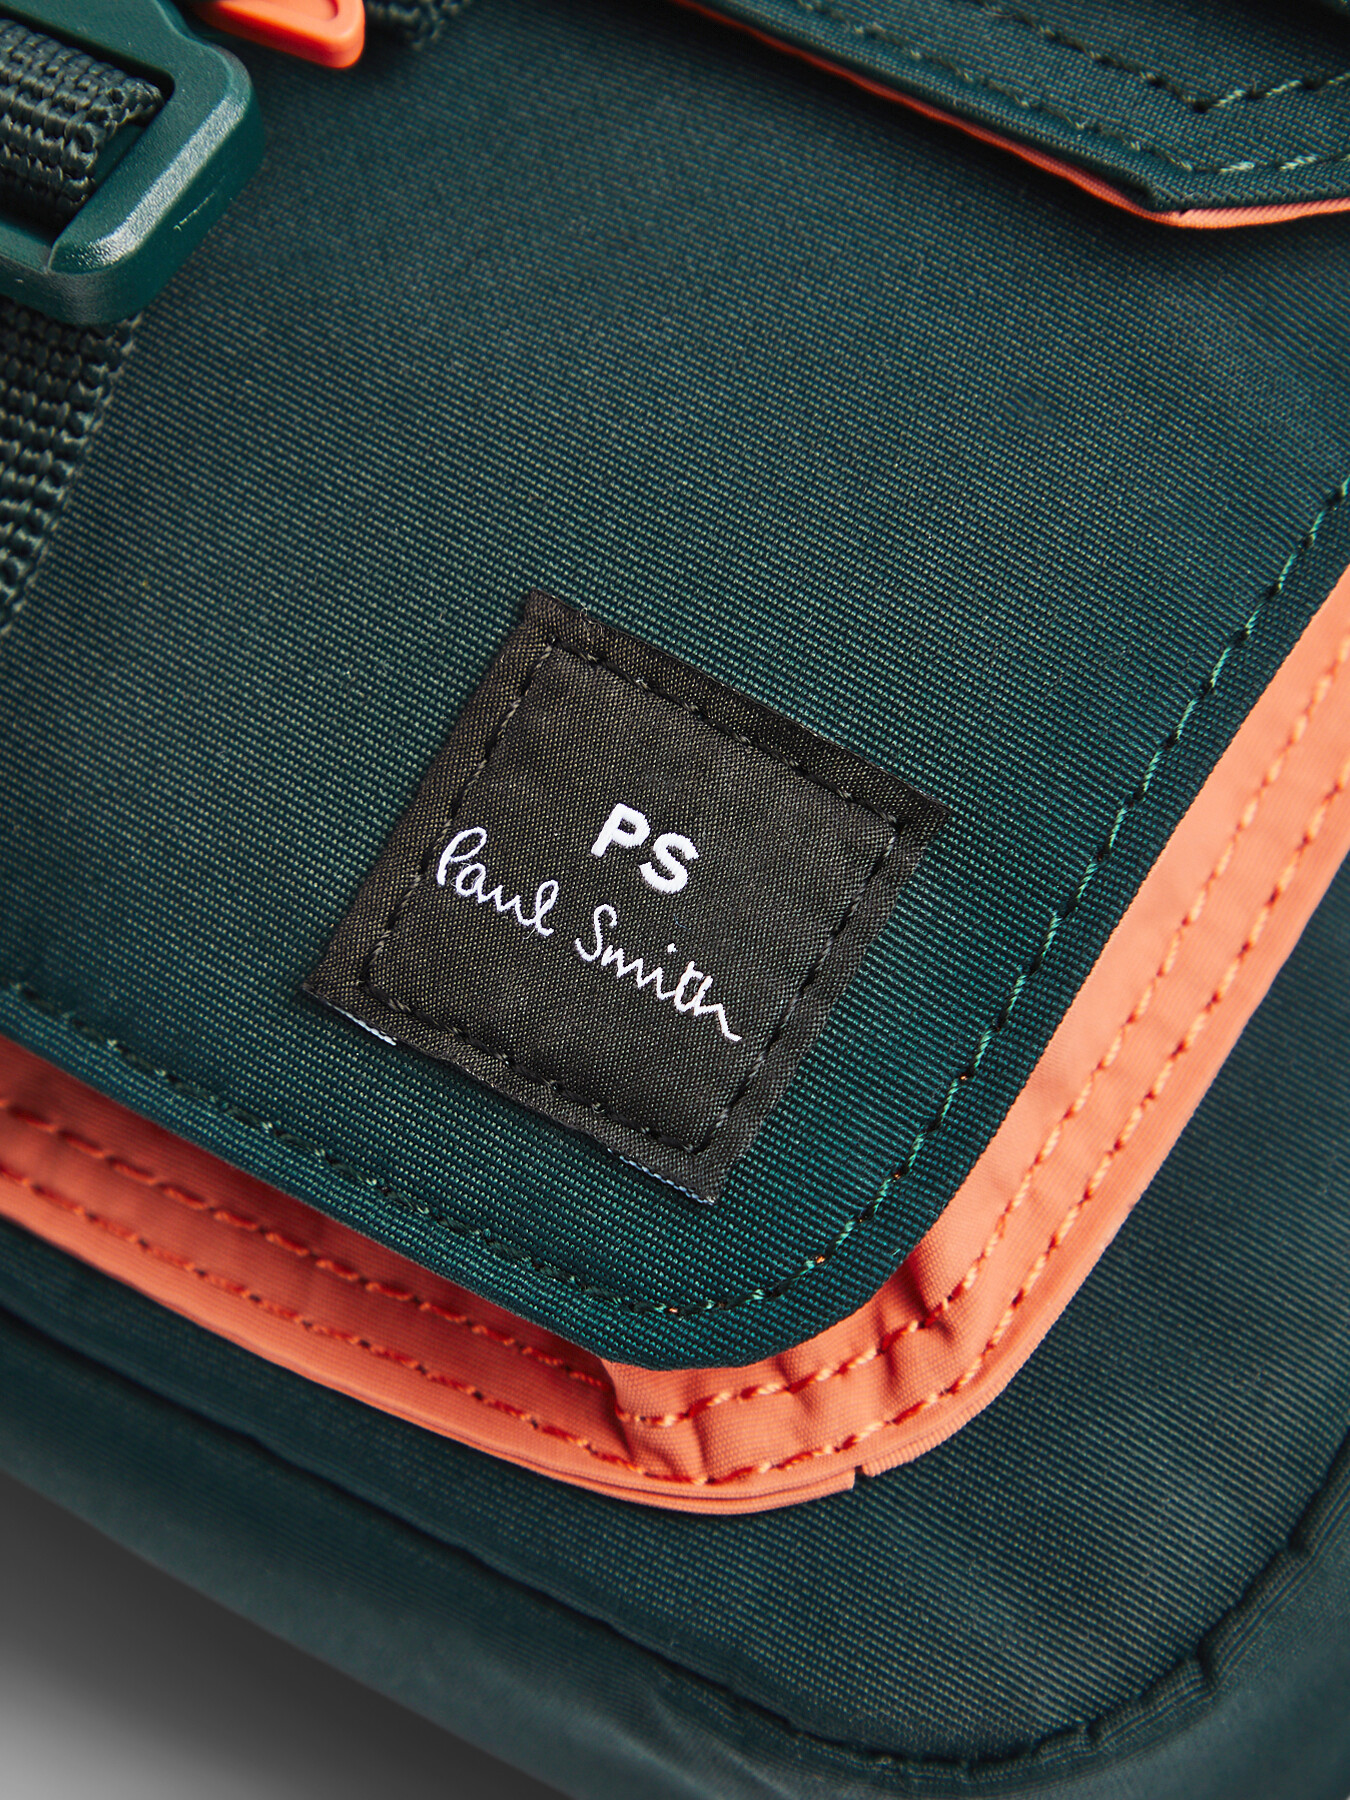 Paul Smith Mainline Mens Blue Leather Cross Body Bag Brand New